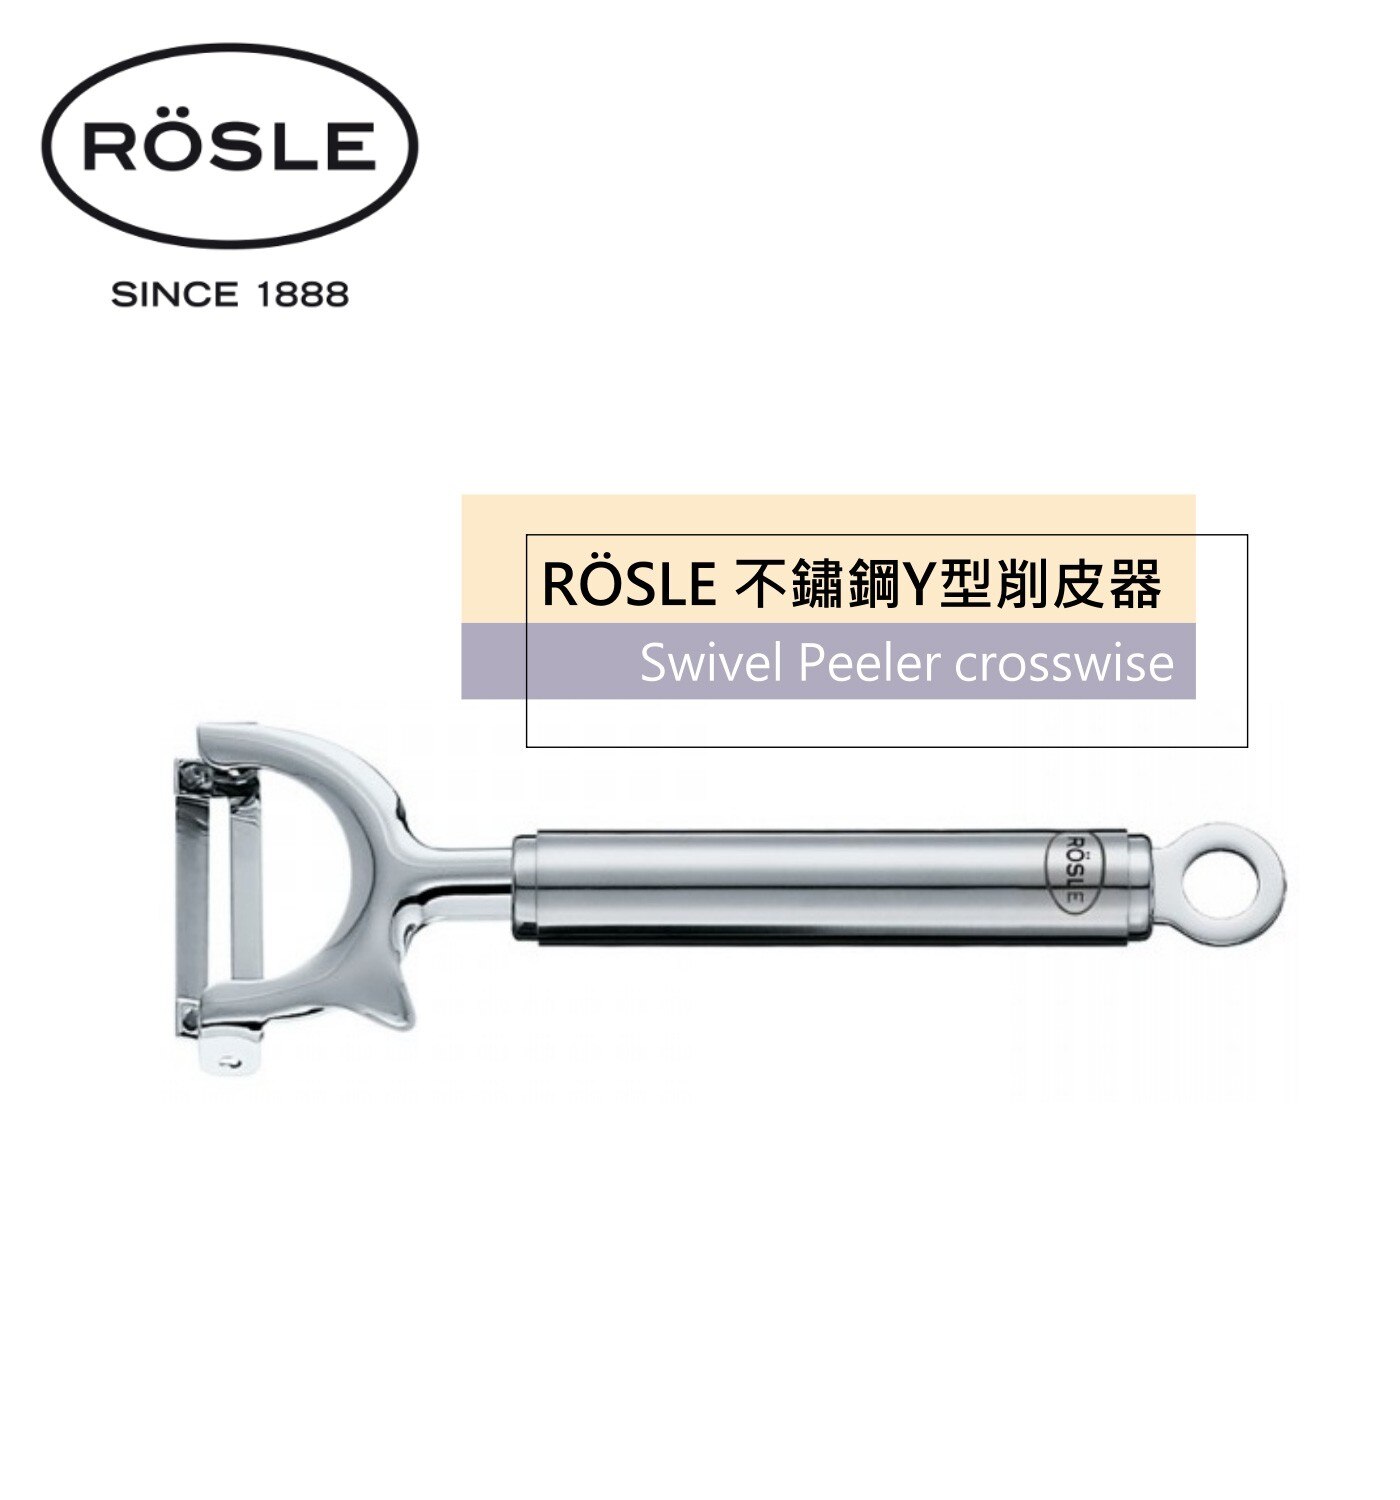 Rosle Stainless Steel Crosswise Swivel Peeler